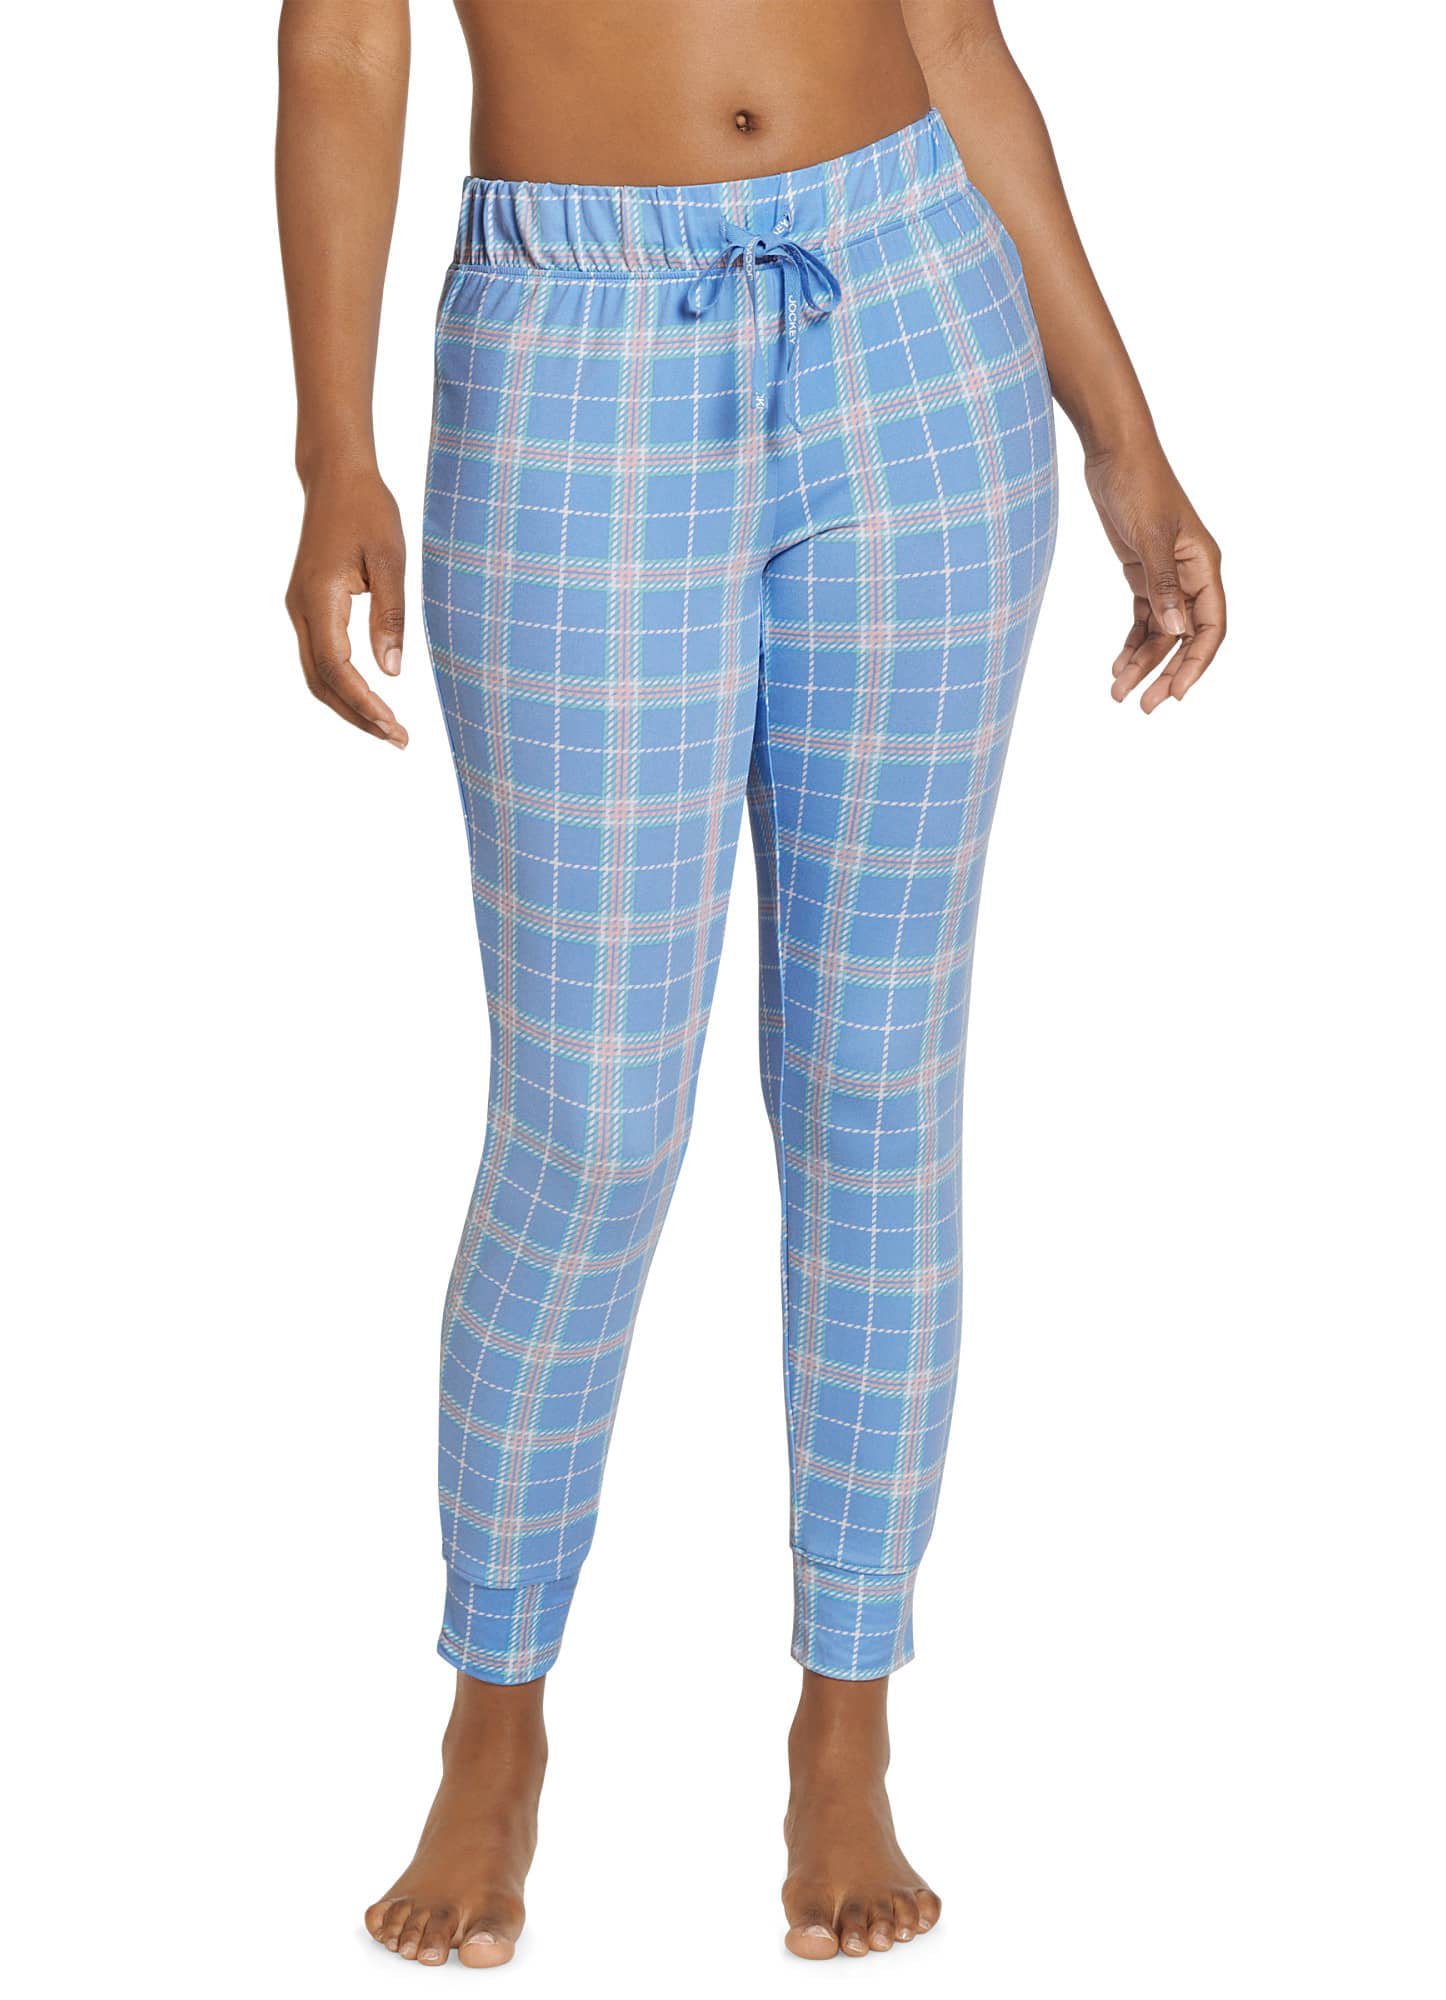 Buy Jockey Women's Pyjama Pants at Amazon.in